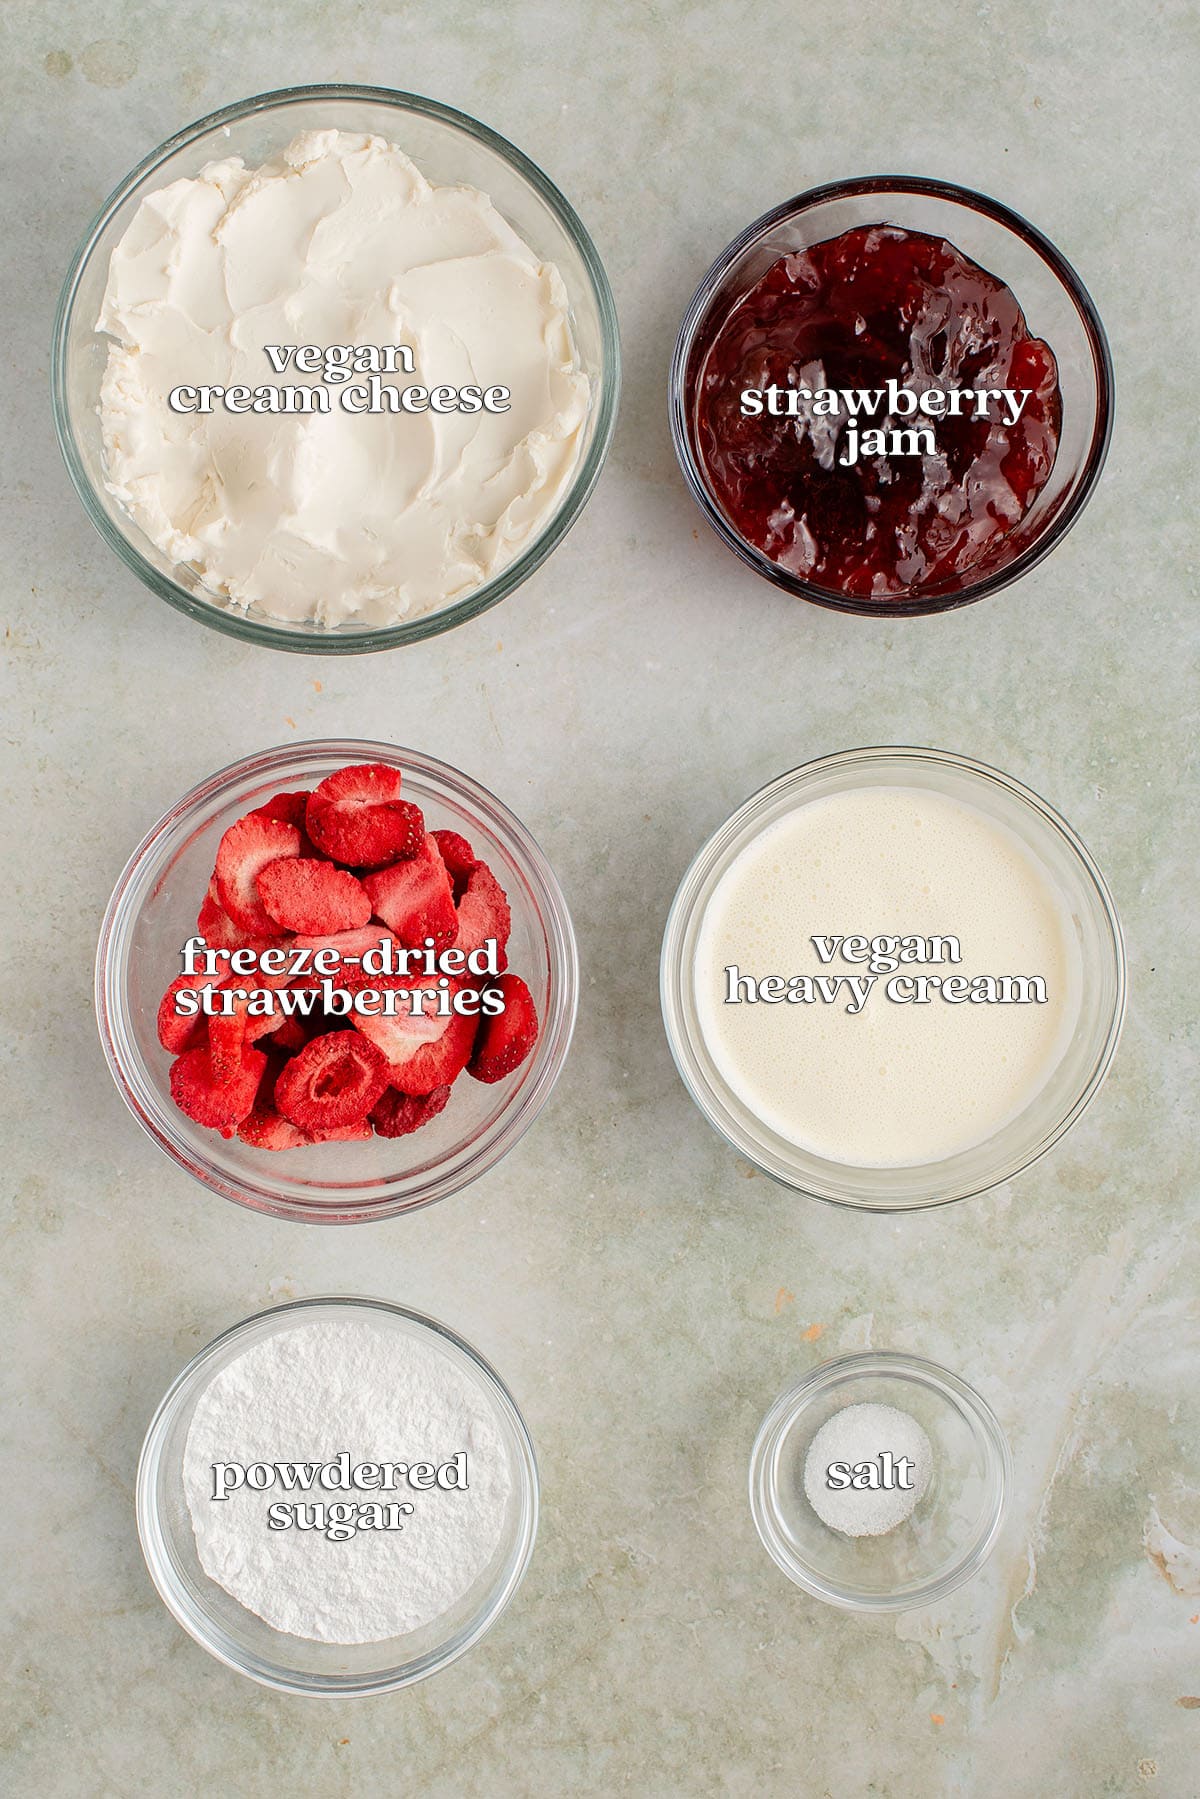 labeled ingredients for vegan strawberry mousse: vegan cream cheese, strawberry jam, freeze dried strawberries, vegan heavy cream, powdered sugar and salt